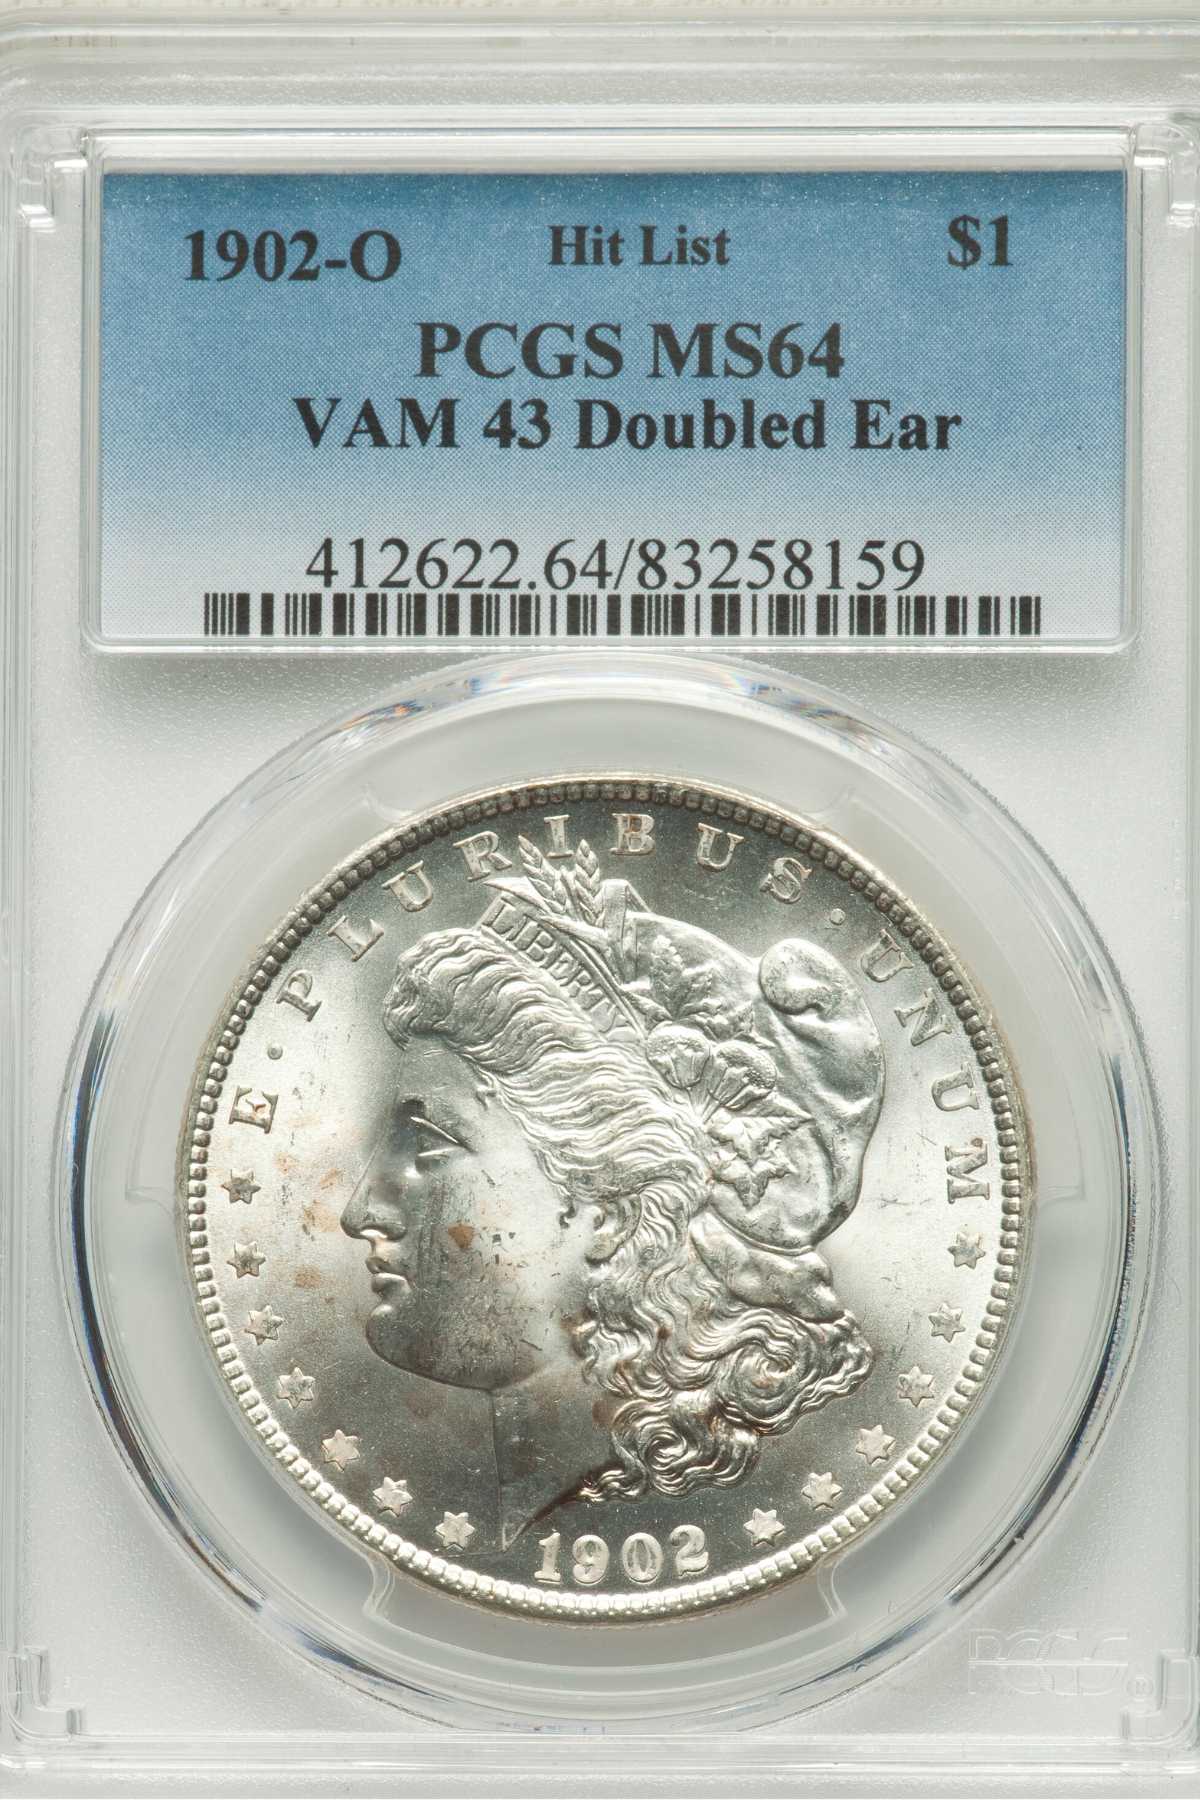 1902-O Silver Dollar with Double Ear value